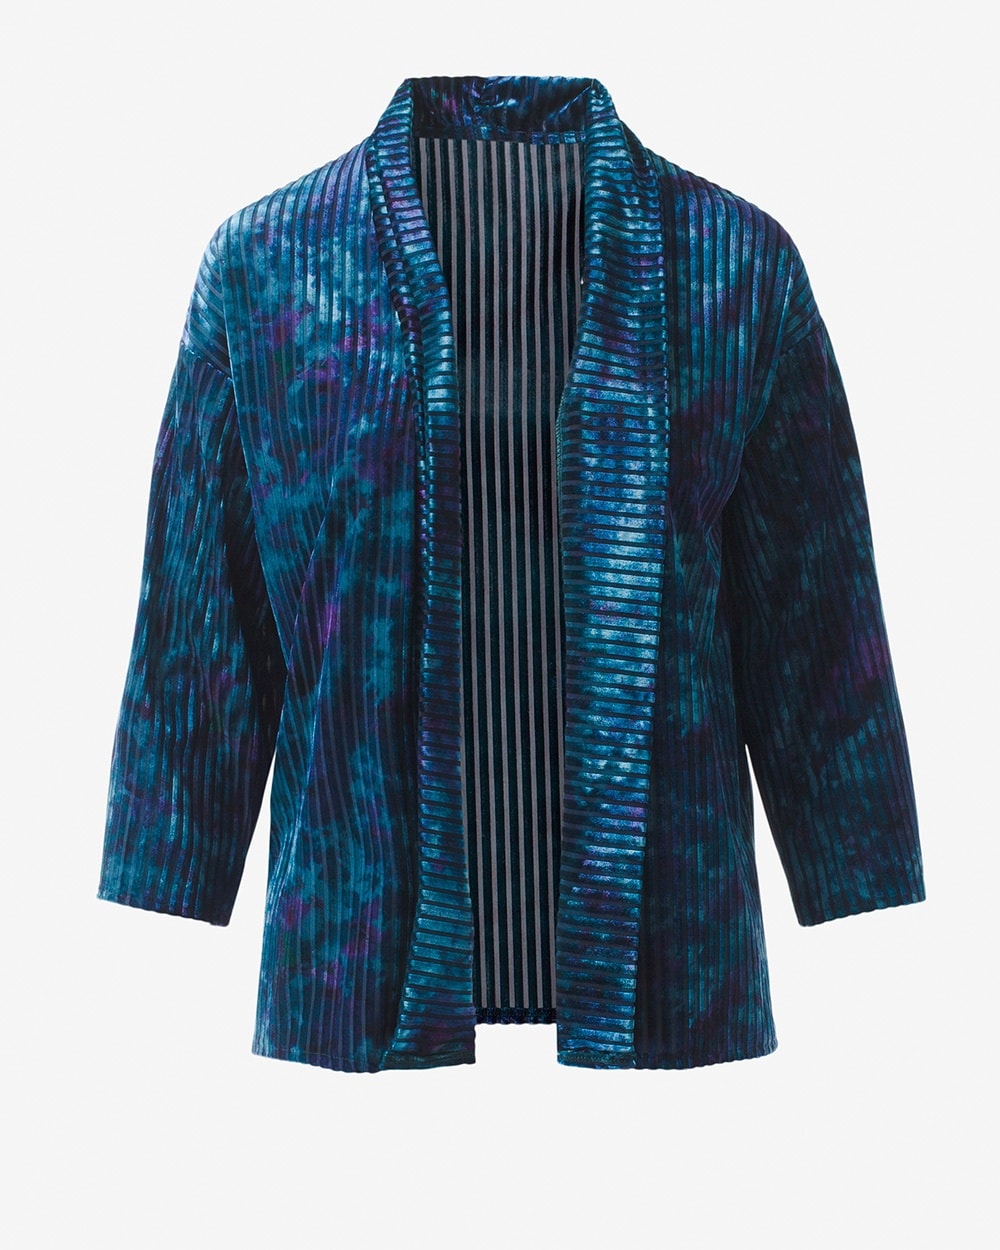 Velvet Stripe Tie-Dye Jacket